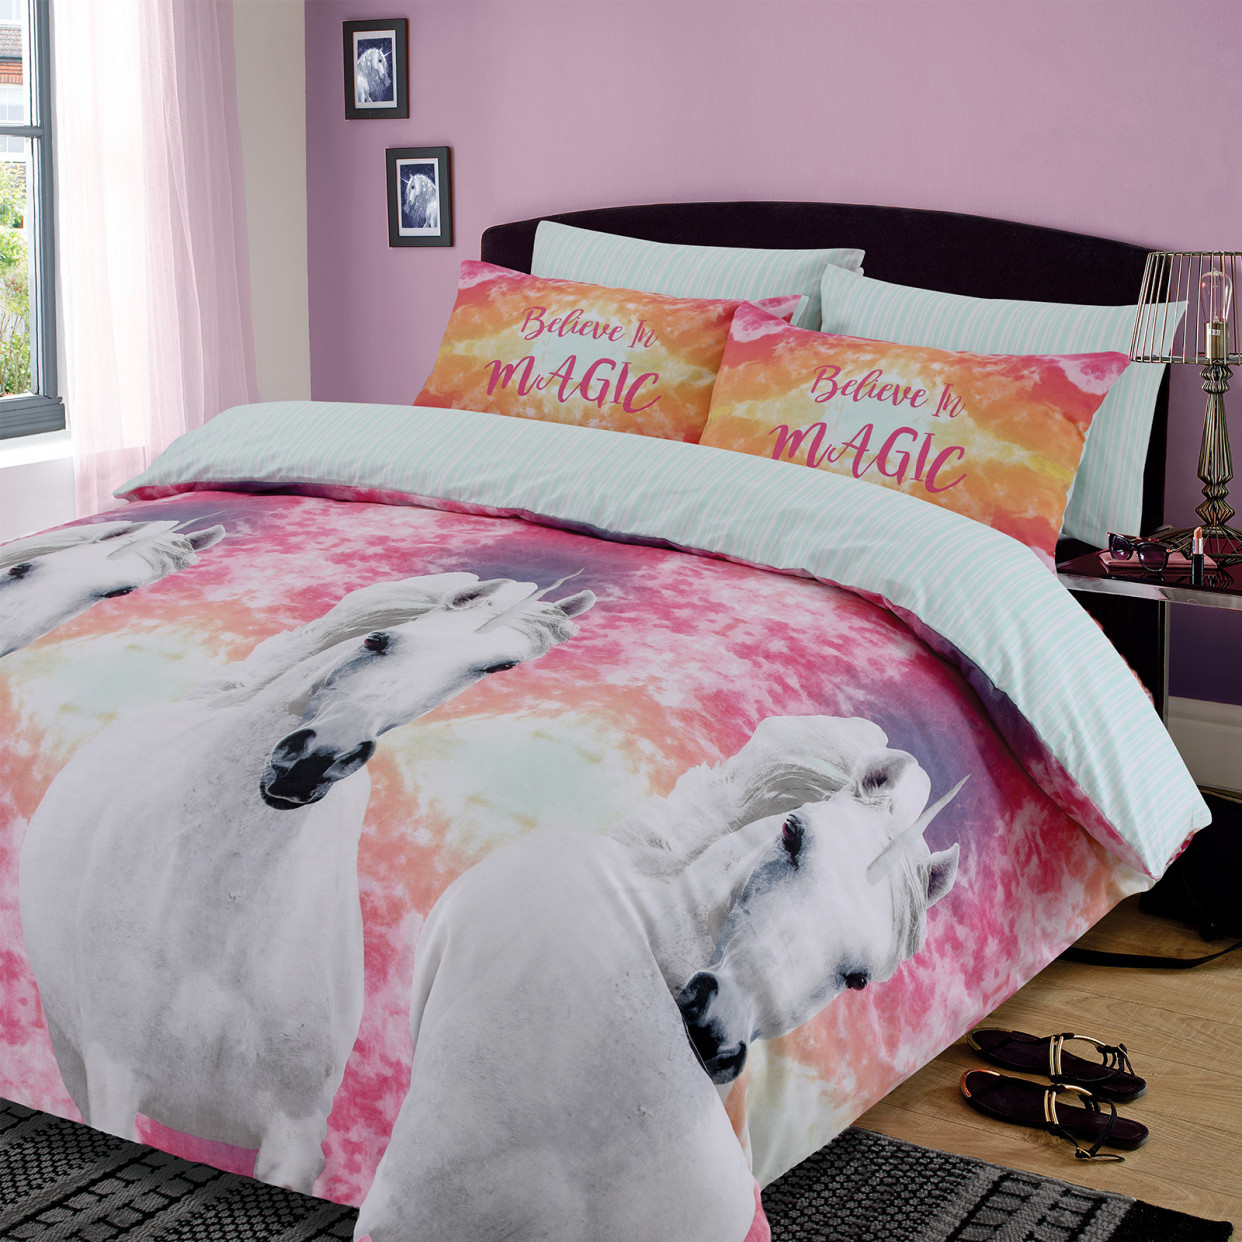 Dreamscene Unicorn Magic Duvet Cover with Pillowcase Reversible Kids Stripe Bedding Set, Pink Blue Grey - Double>